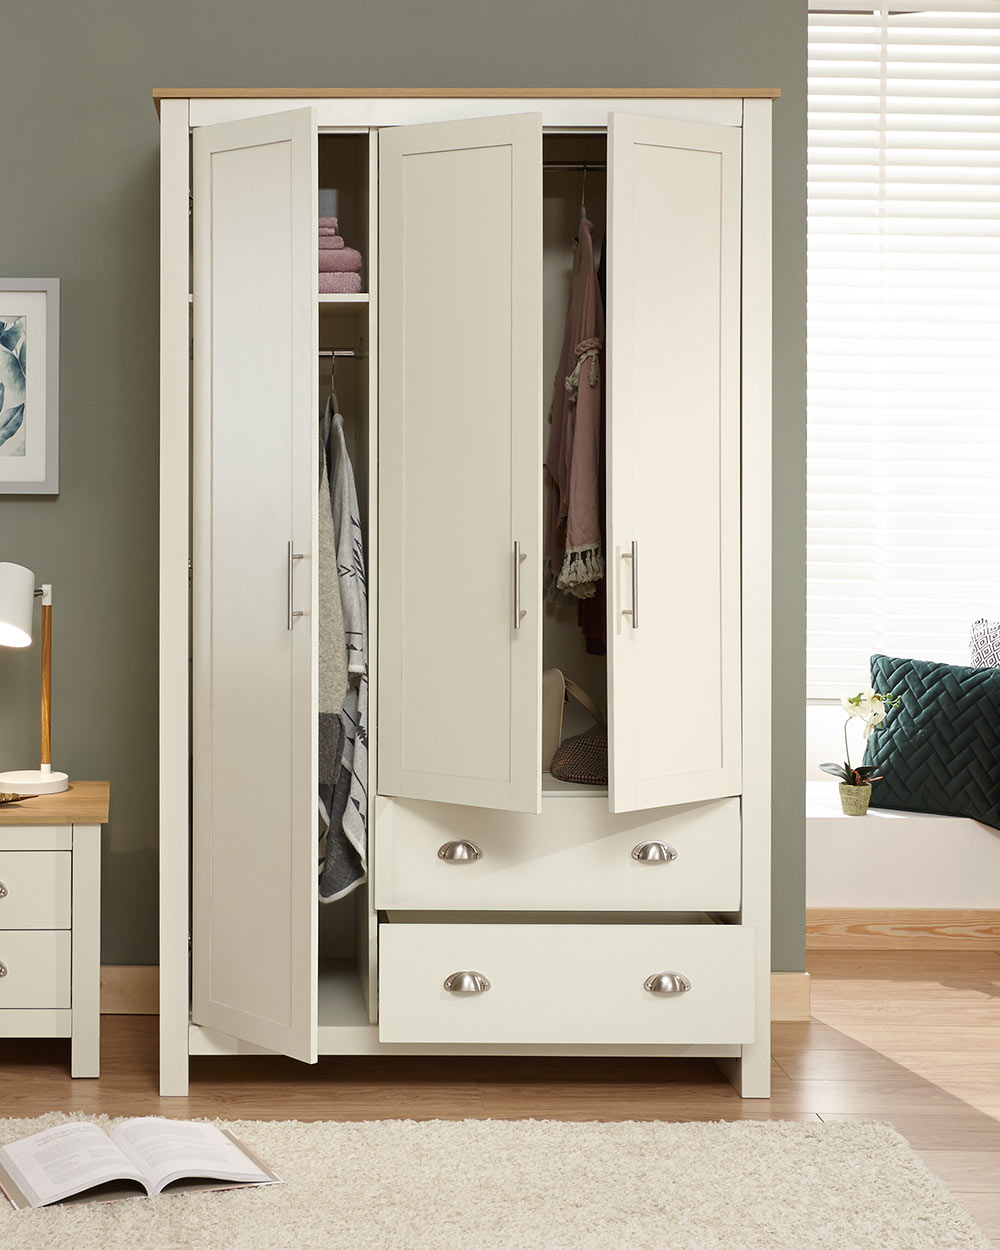 Lancaster 3 door 2 drawer wardrobe shaker style doors in a bedroom lifestyle setting with the doors open